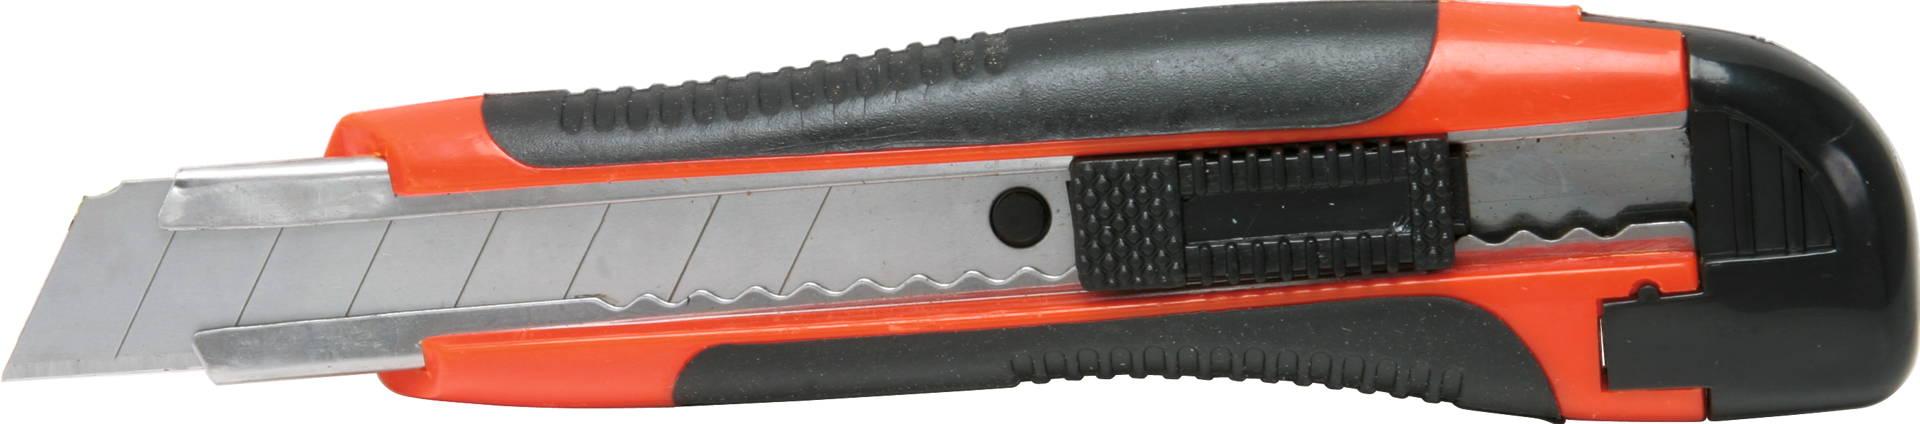 Cuttermesser Abbrechklinge 18mm Standard inkl. Klinge L140mm